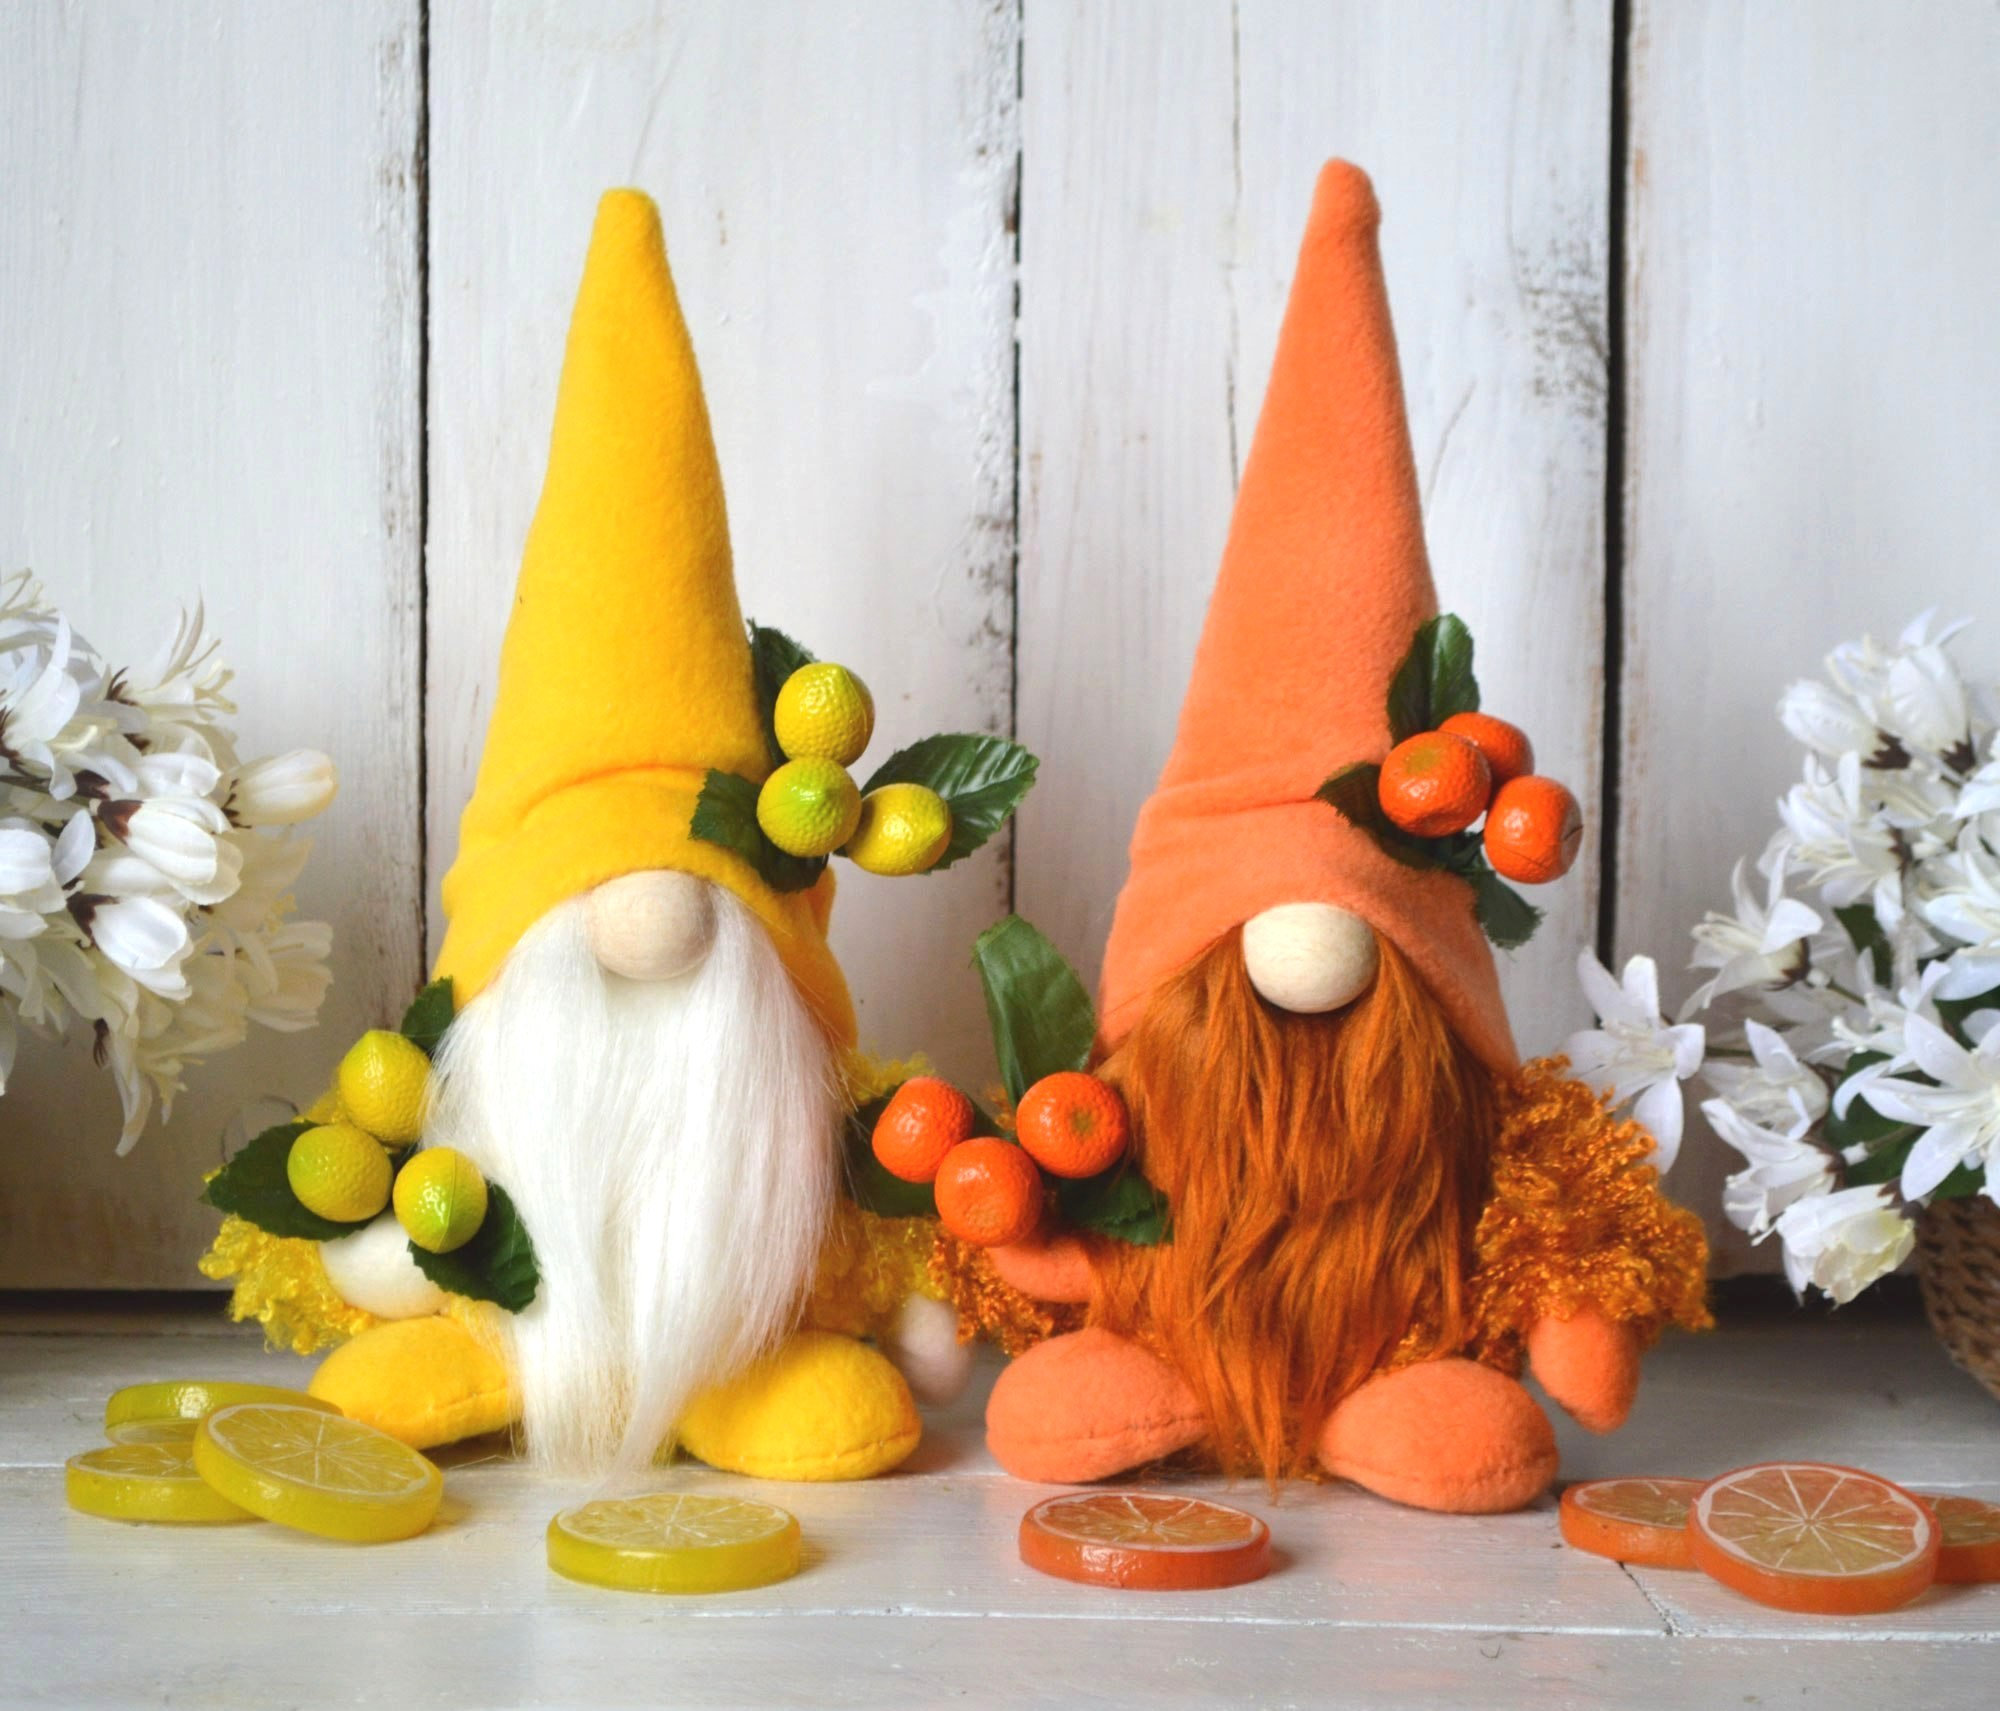 Lemon Gnome, Kitchen Gnome, Lemon Tier Tray Decorations Farmhouse Gnome,  Citrus Gnome, Summer Gnome, Kitchen Decor 